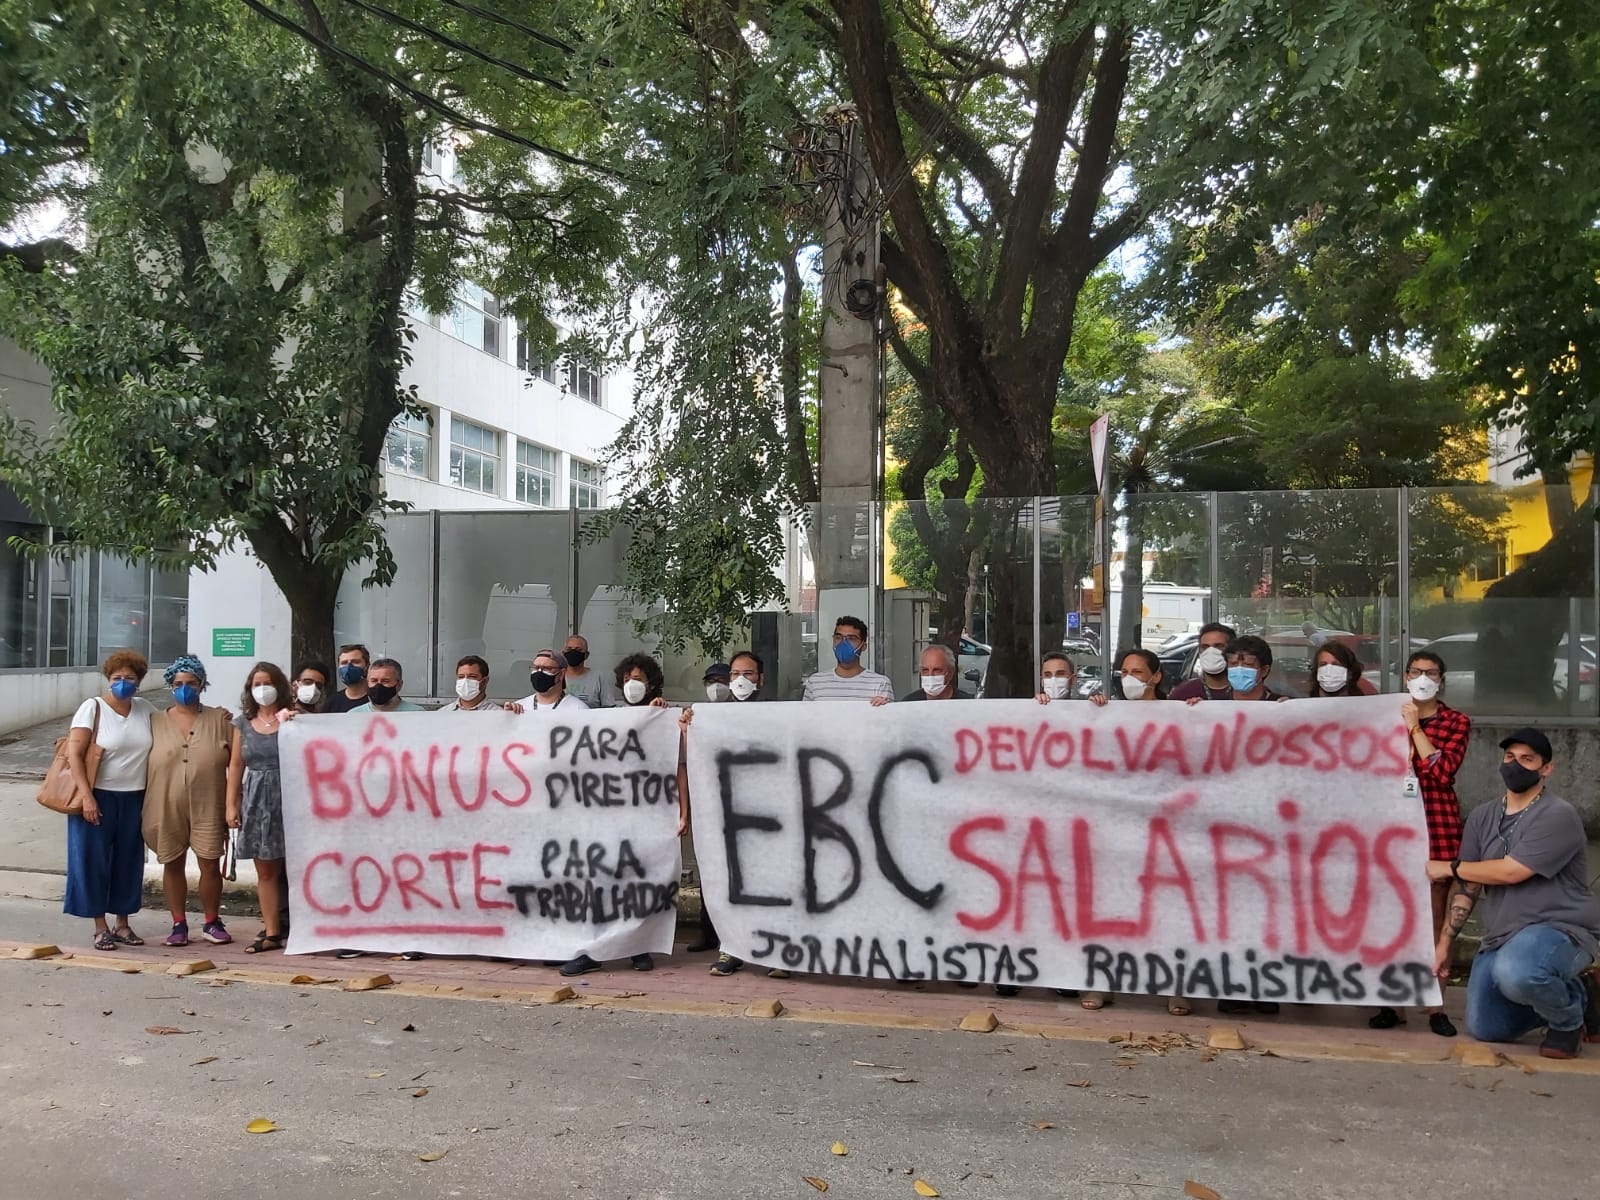 Radialistas e Jornalistas protestam por corte de salários e EBC pode pagar multa de R$ 100 mil por descumprir liminar judicial